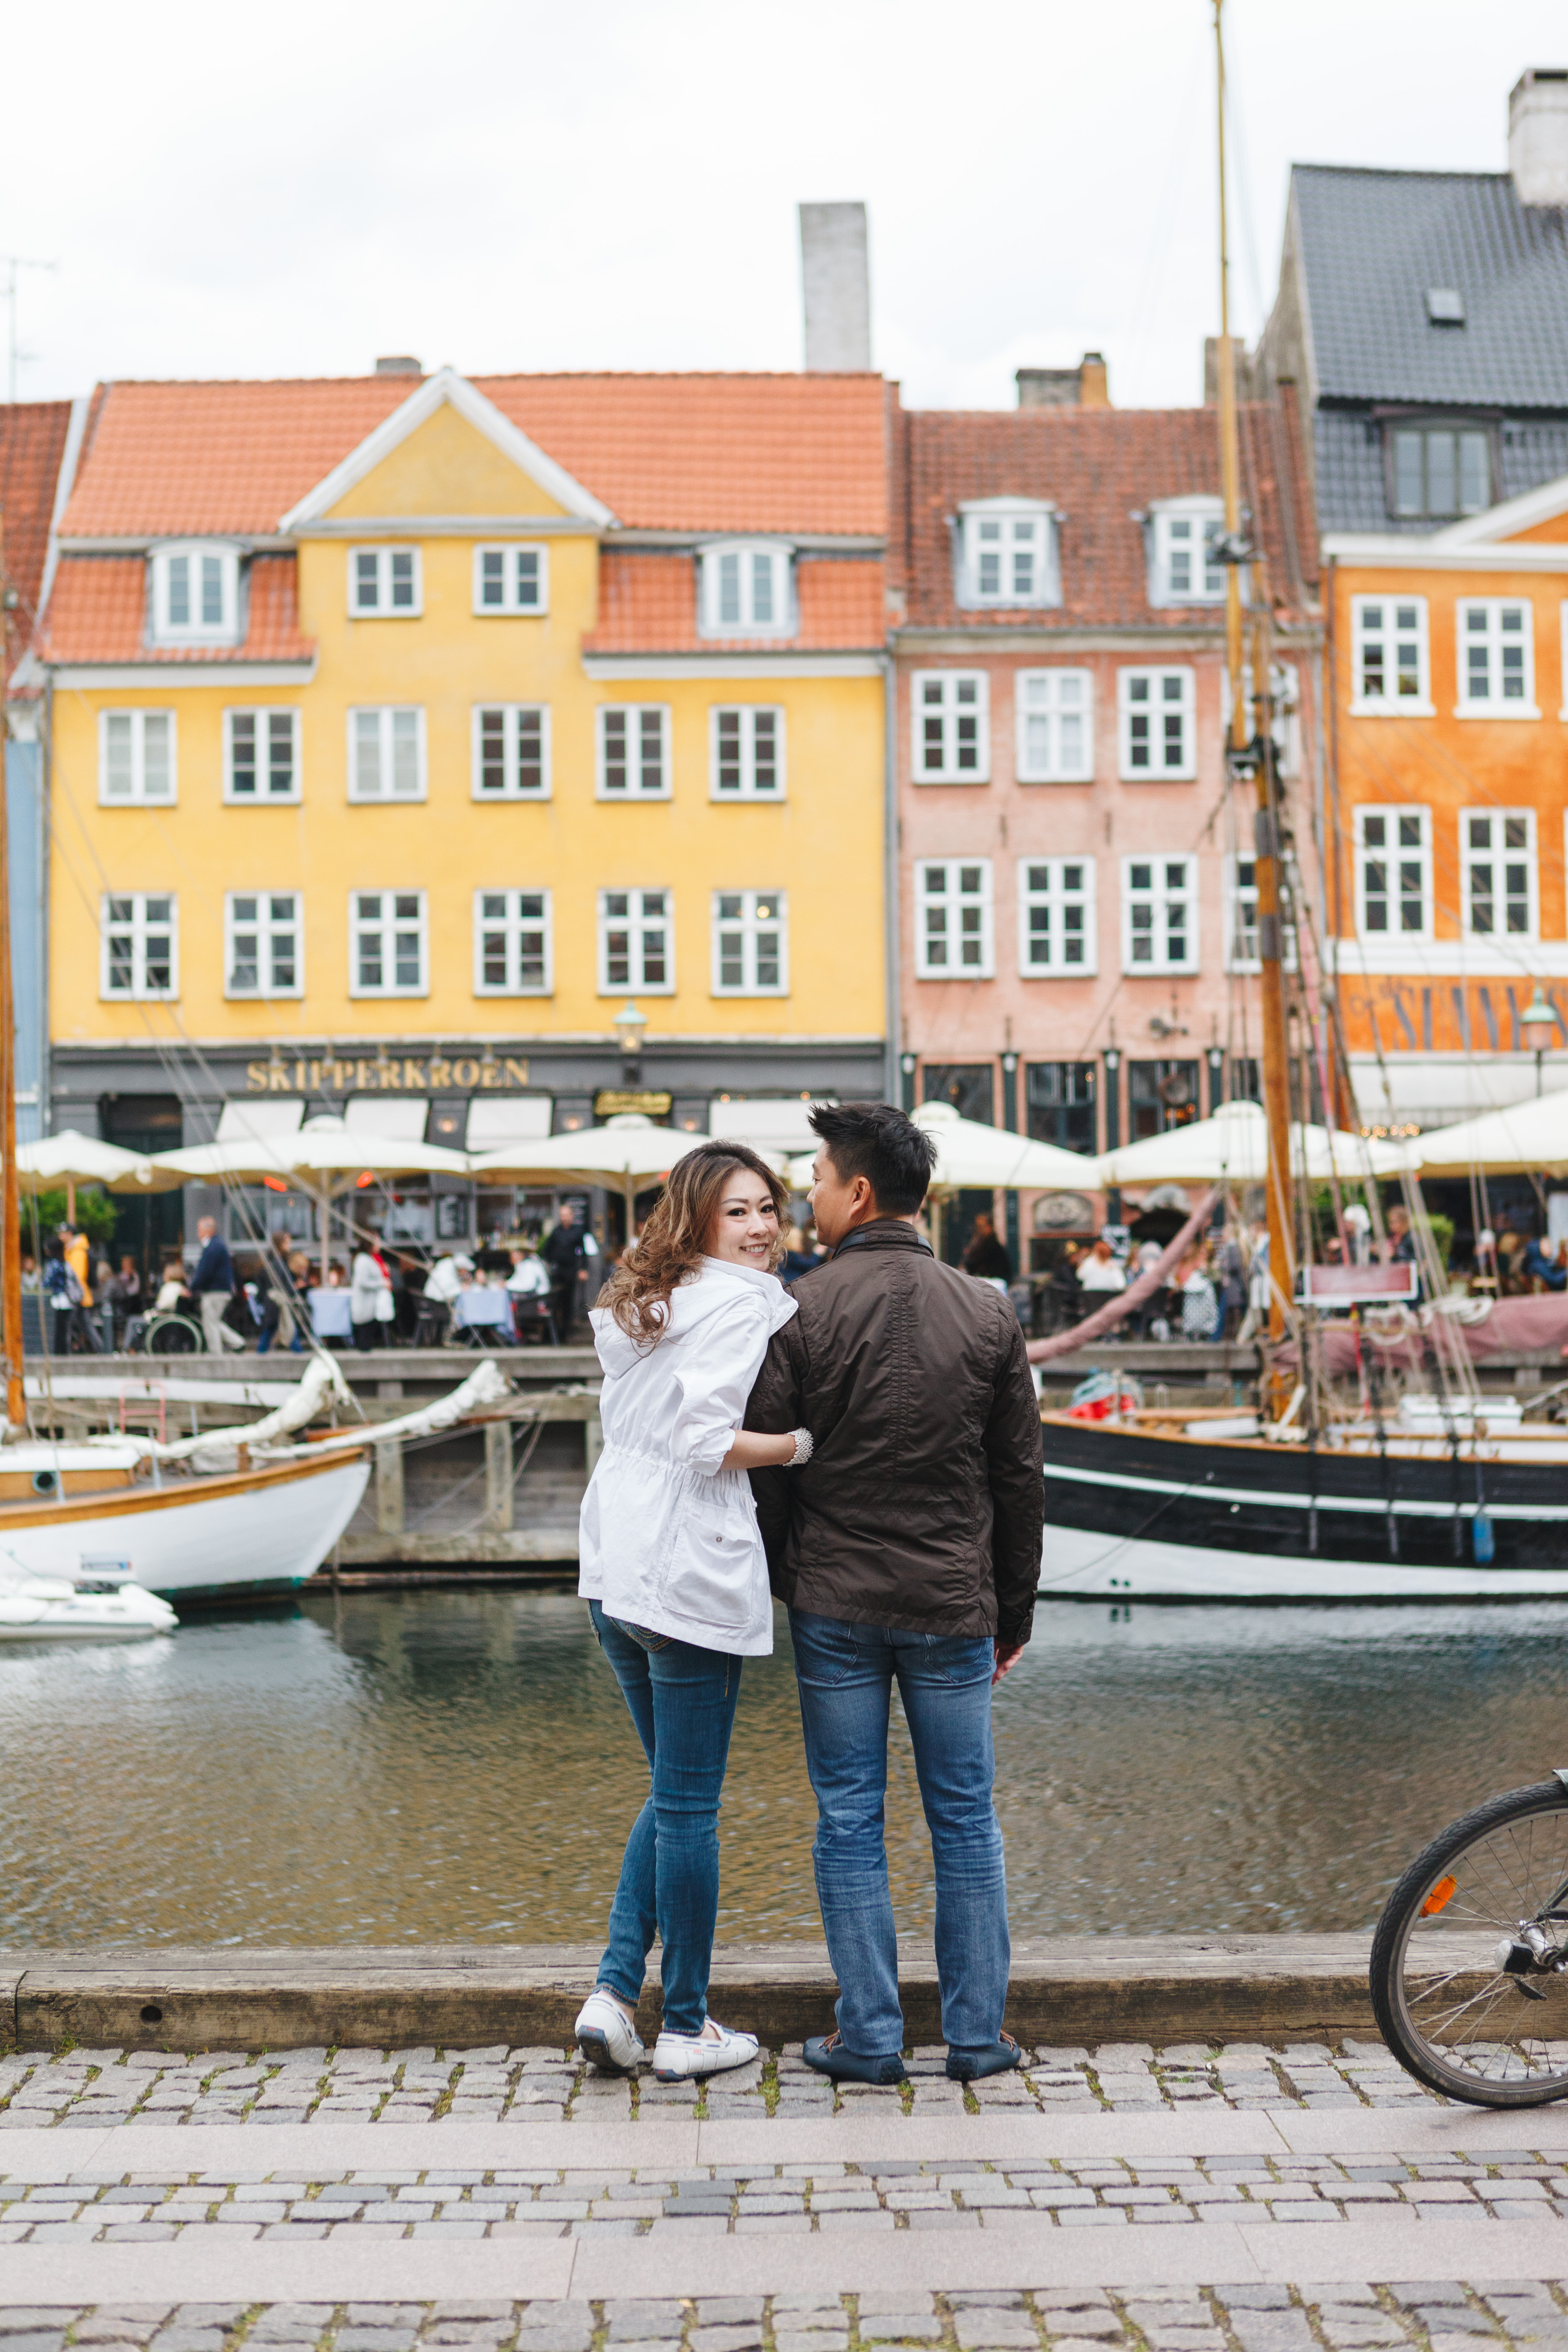 Fun & Private Photoshoot in Copenhagen - Airbnb